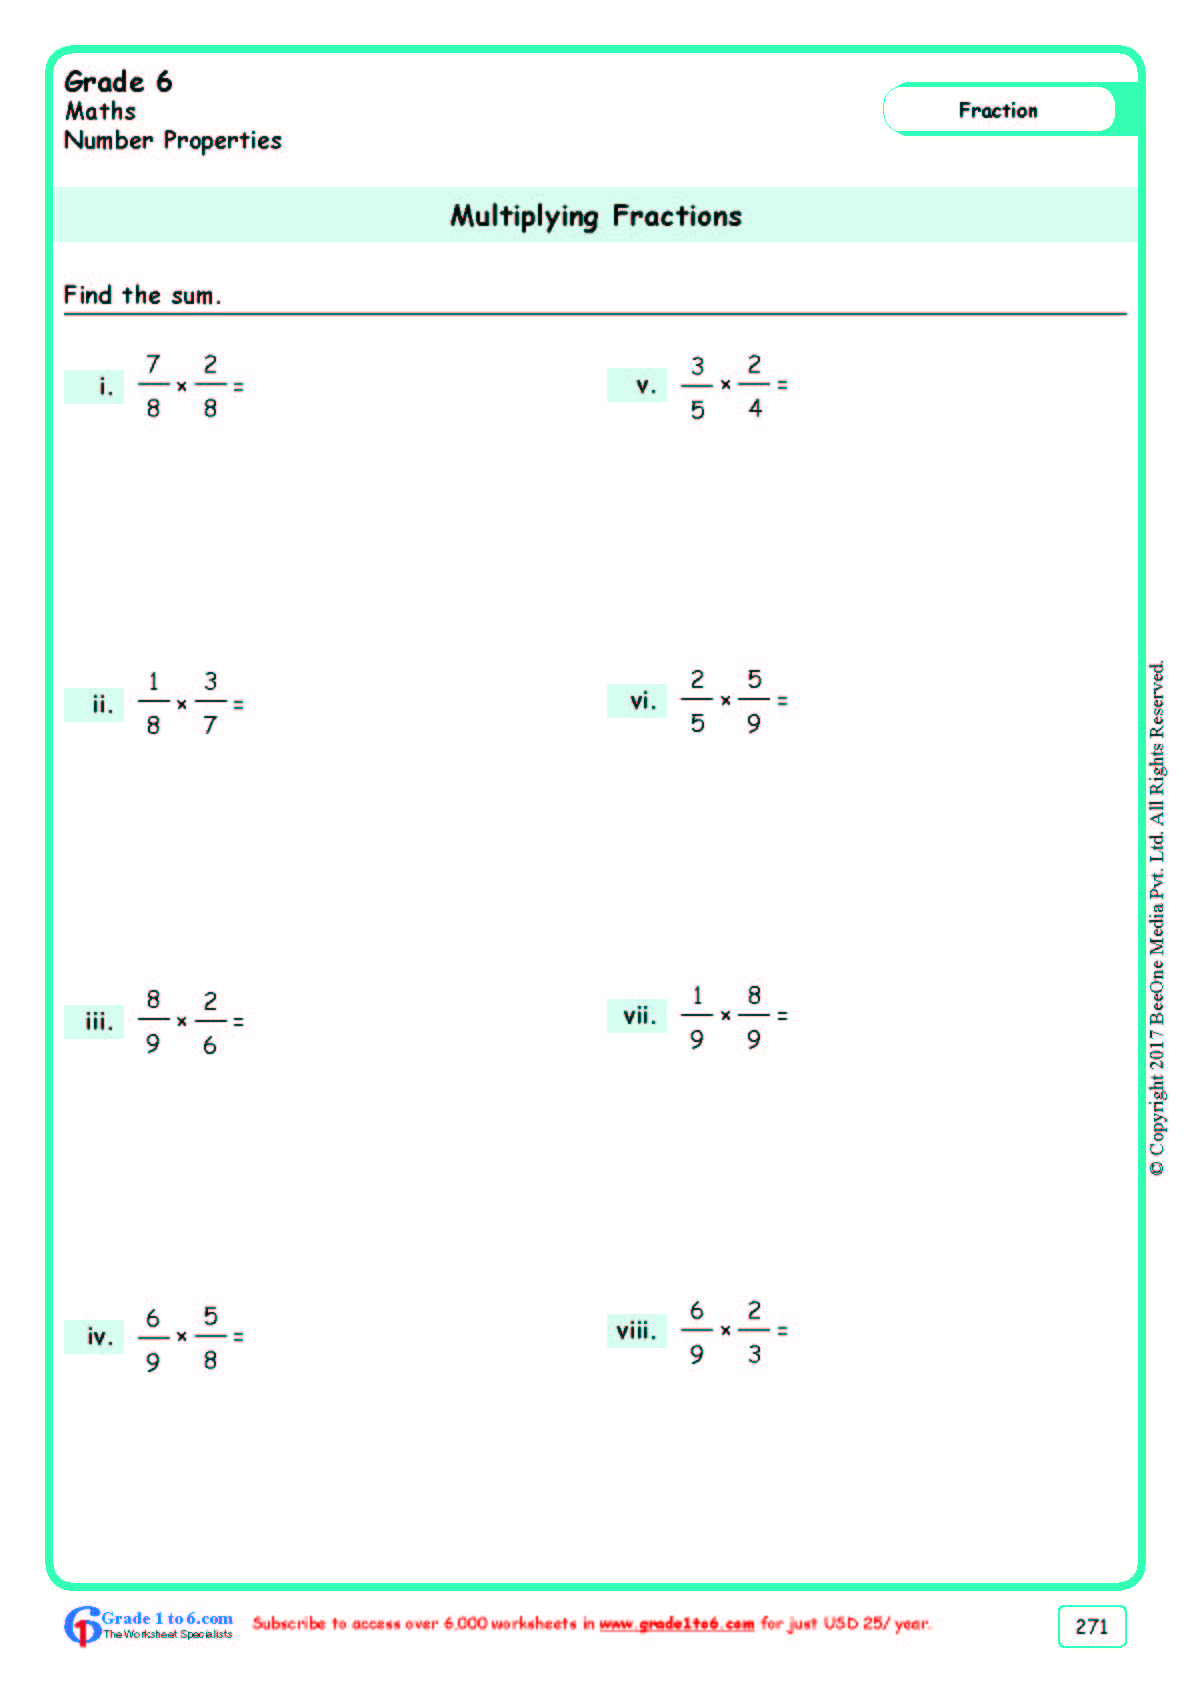 grade-6-multiplying-fractions-worksheets-www-grade1to6